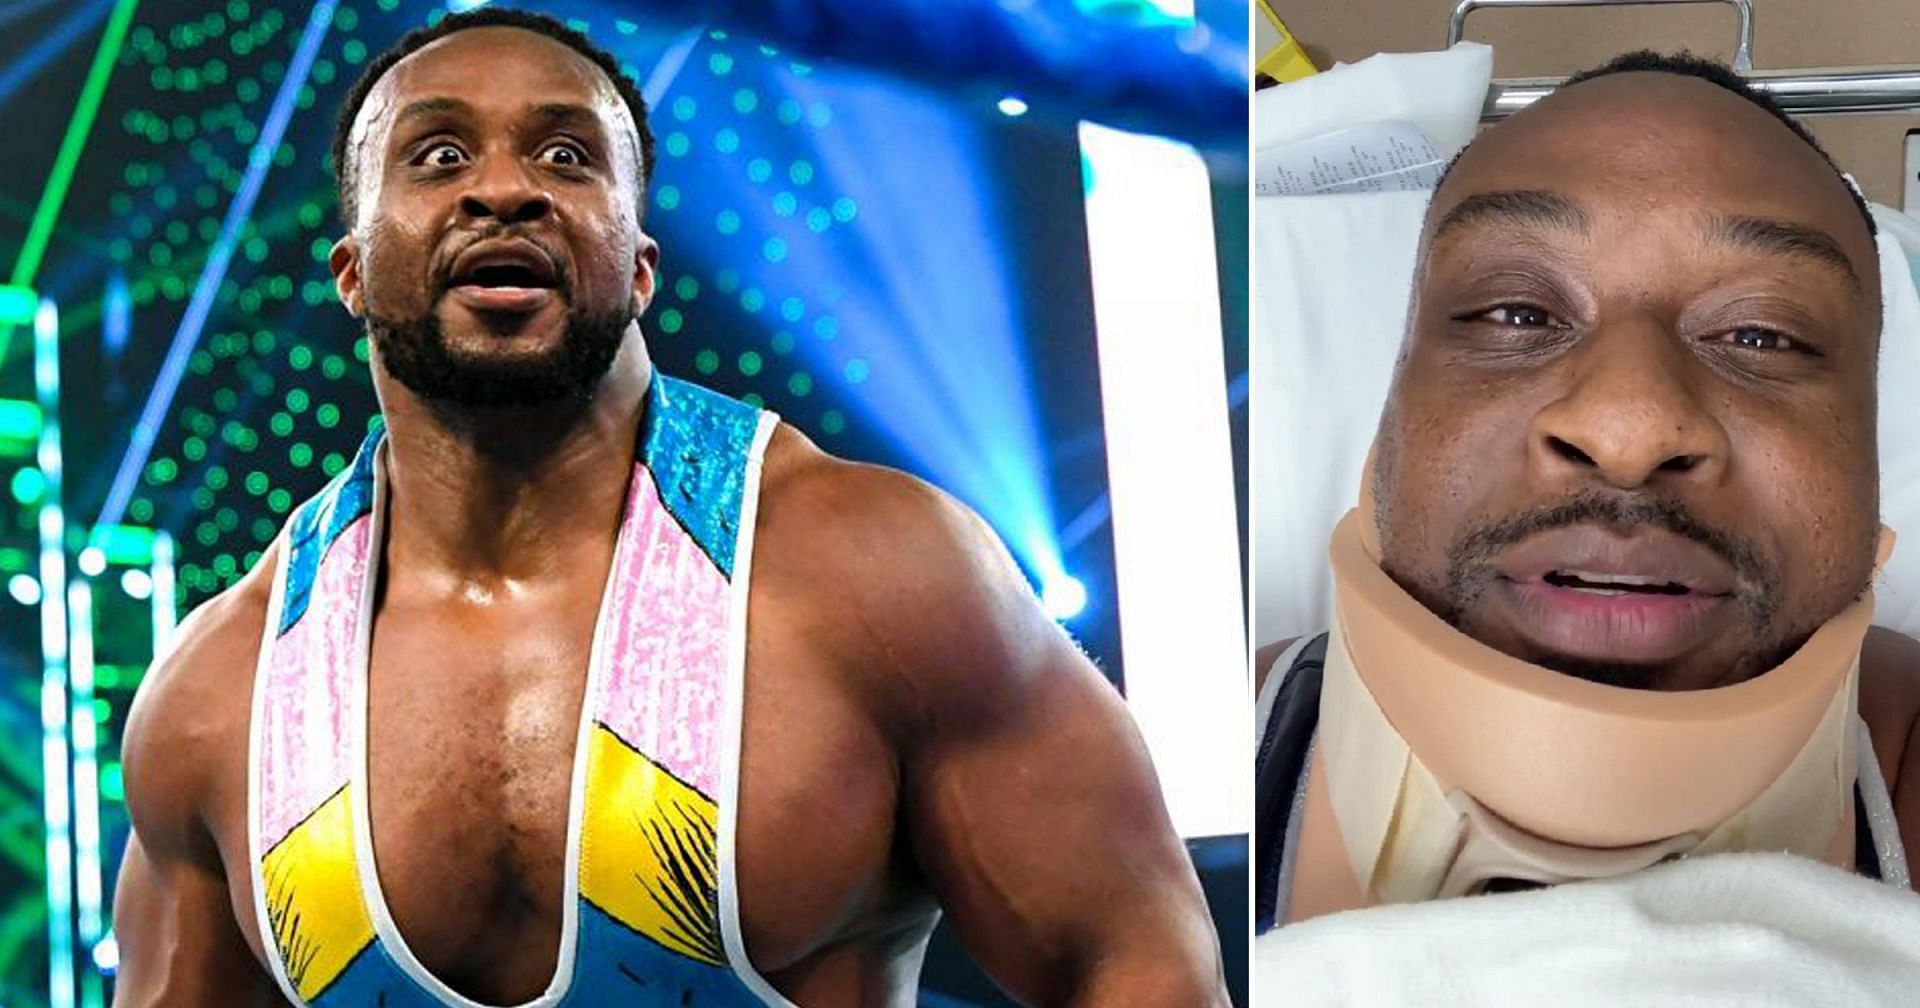 Big E suffered a broken neck on SmackDown last week!